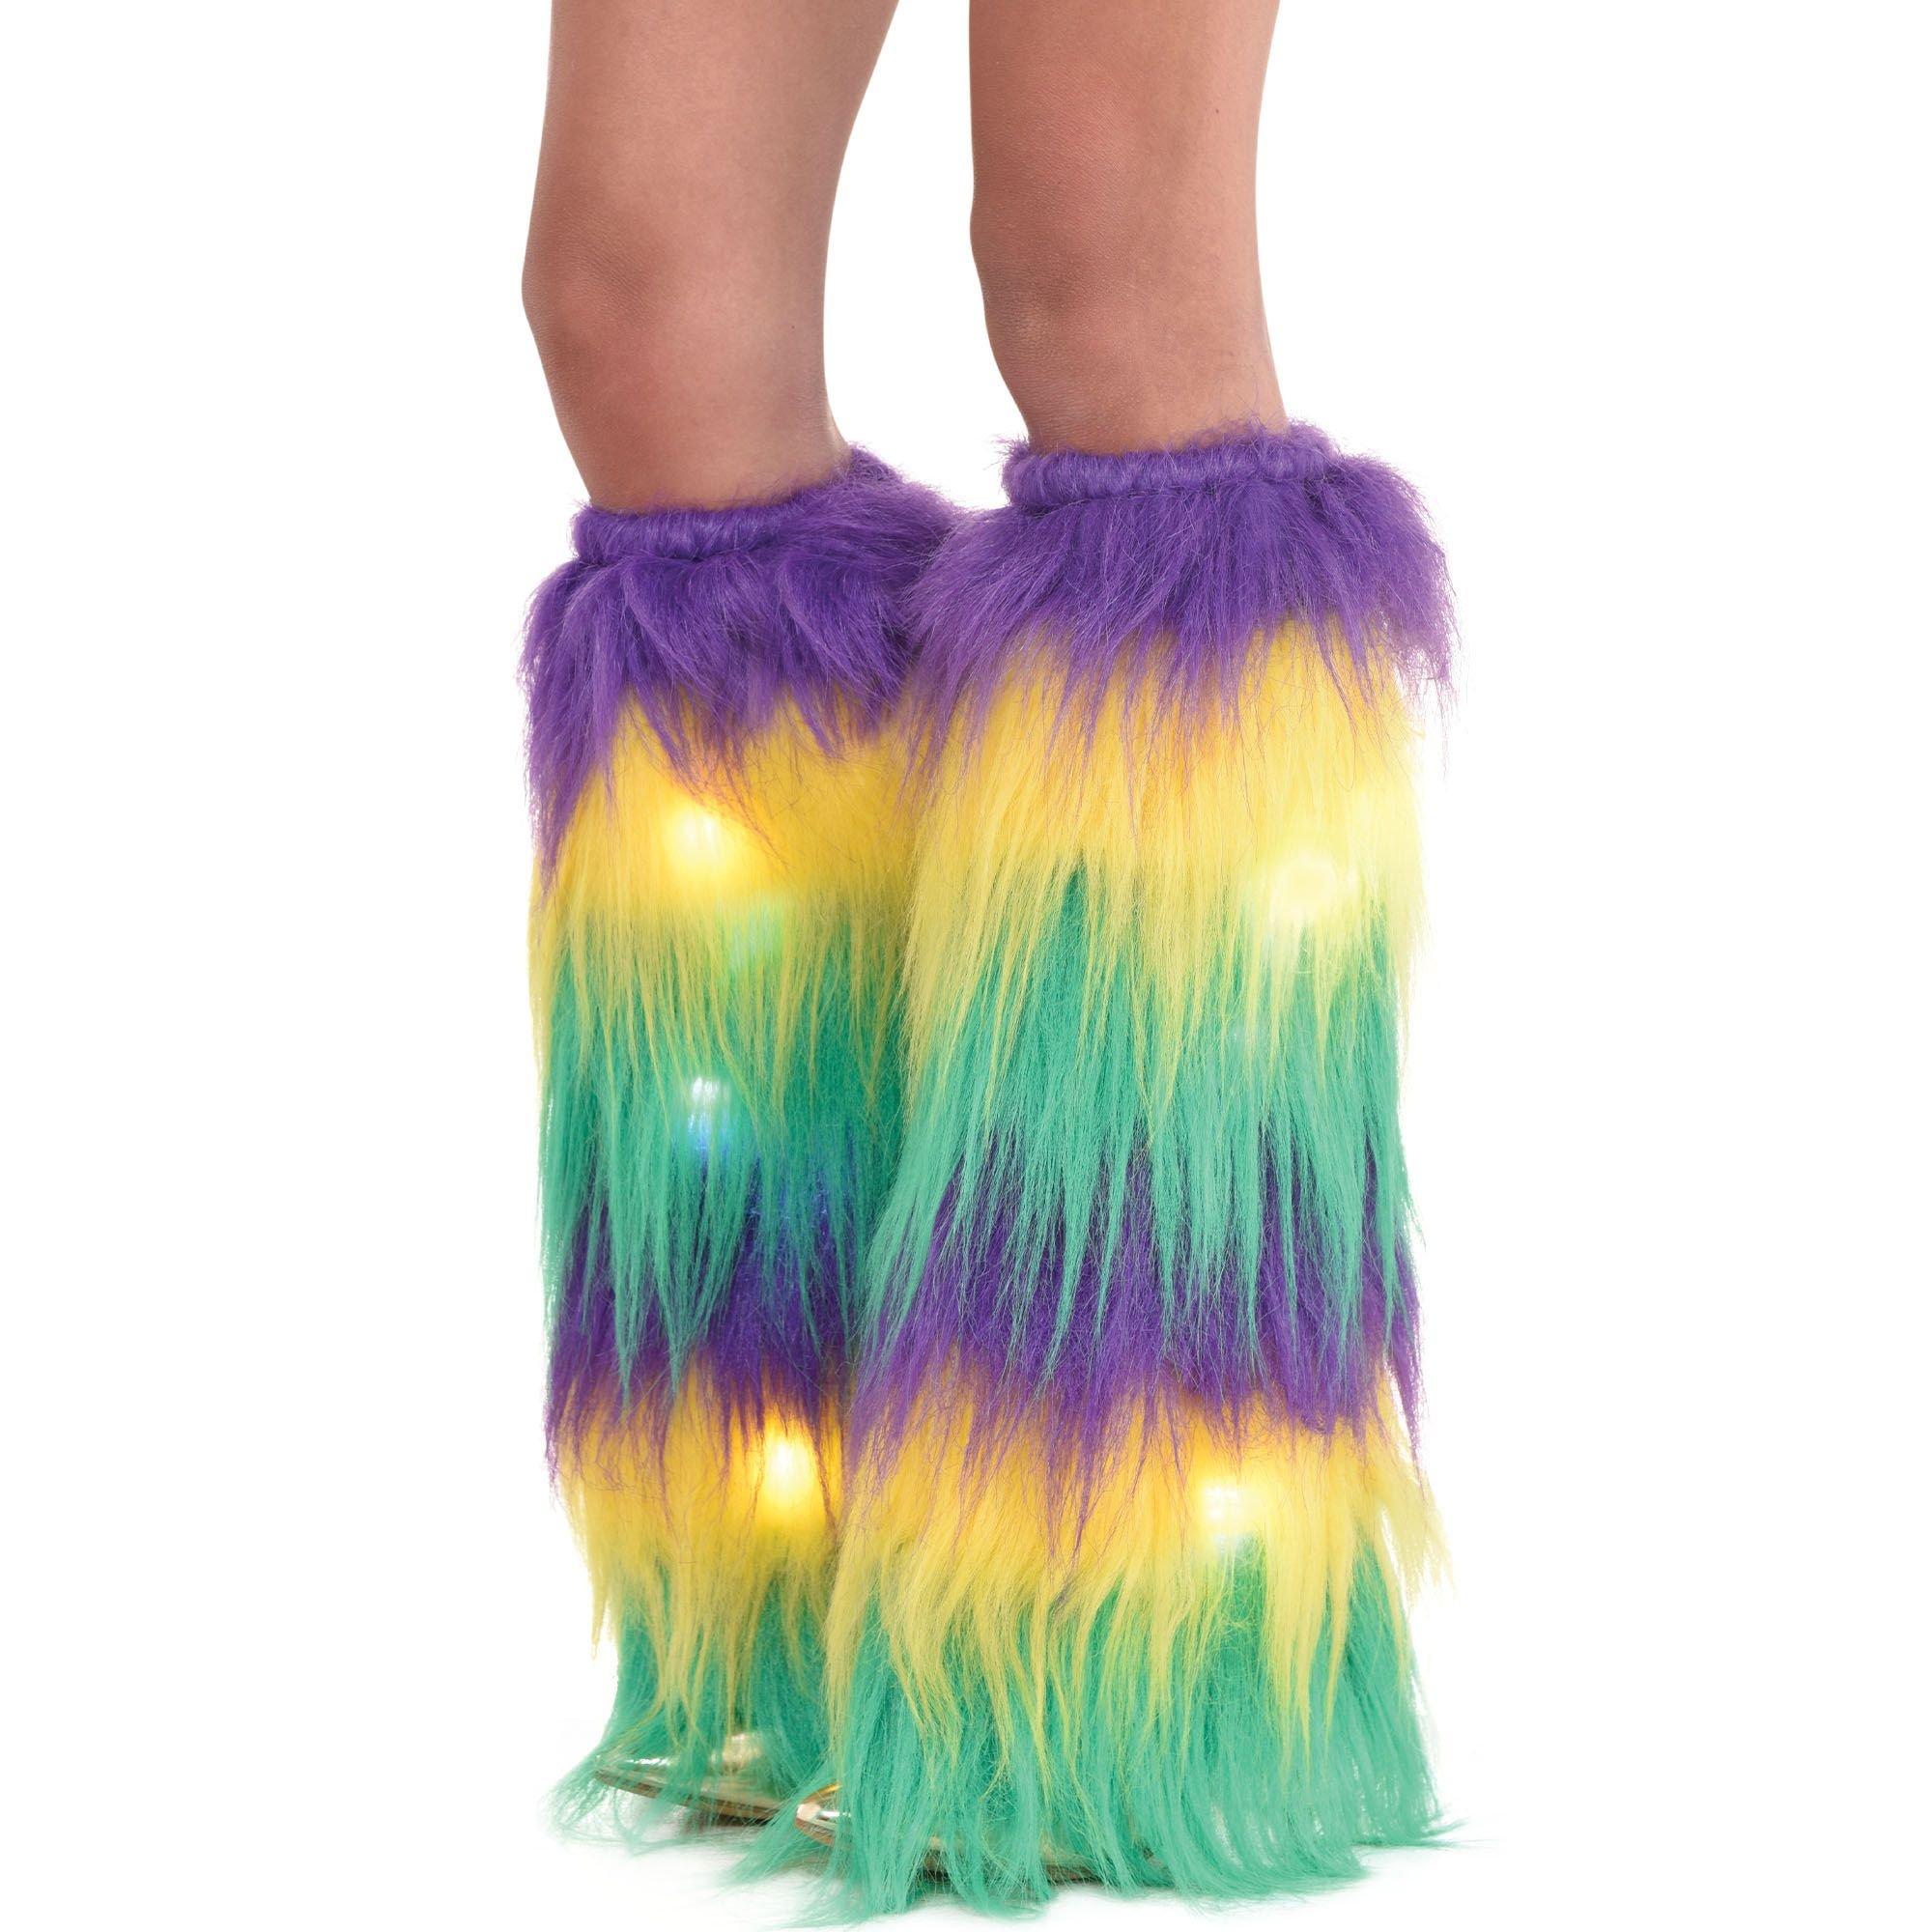 LA-3934, Rave Furry Leg warmers